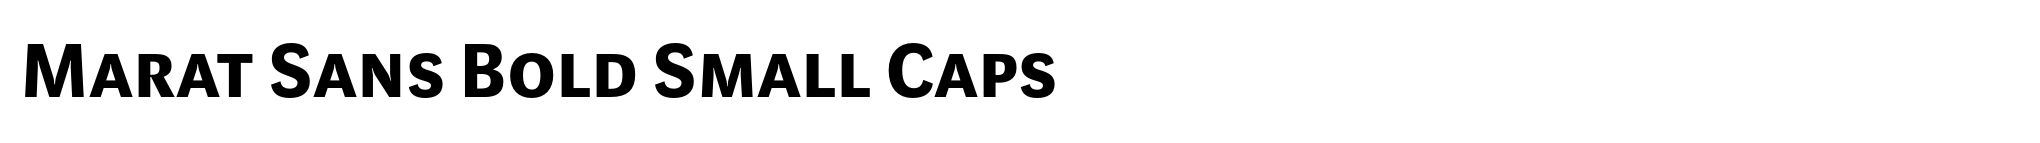 Marat Sans Bold Small Caps image